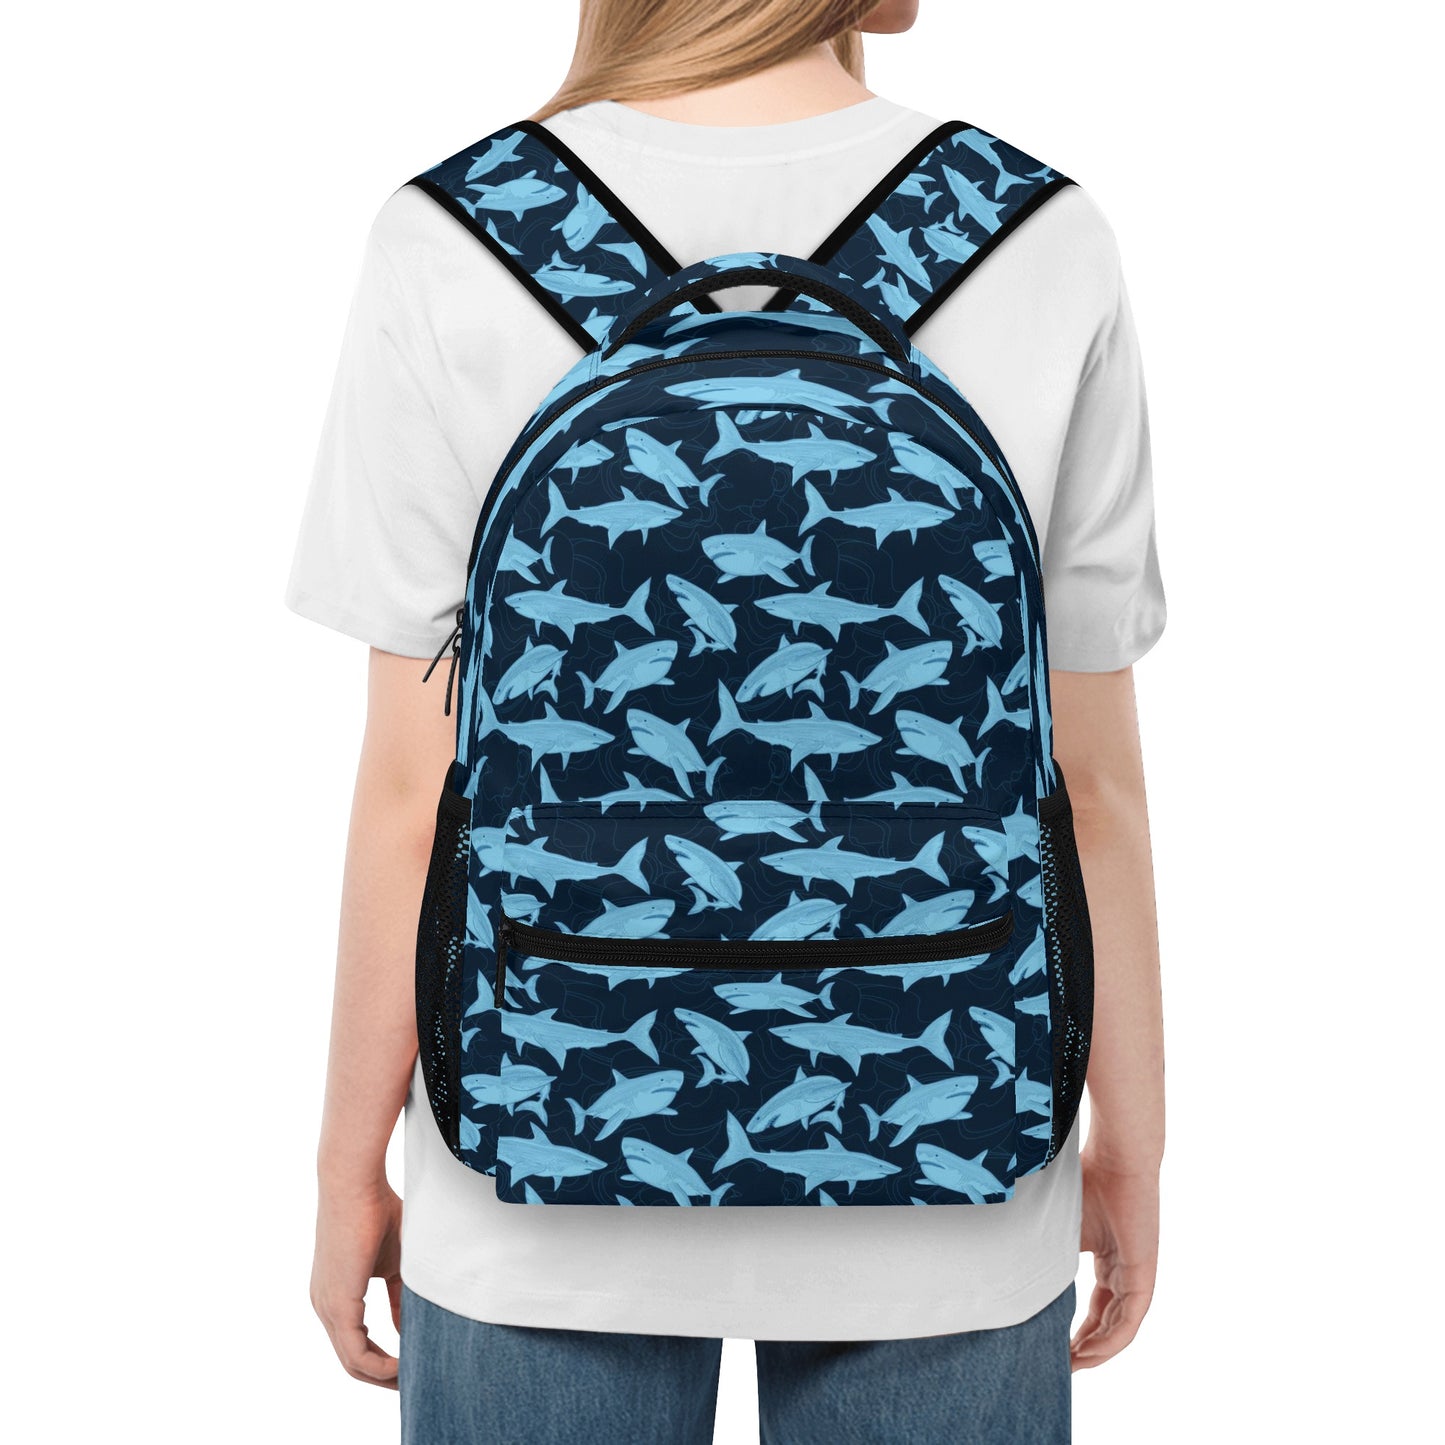 Shark Backpack, Blue Ocean Men Women Kids Gift Him Her School College Cool Waterproof Side Pockets Laptop Aesthetic Bag